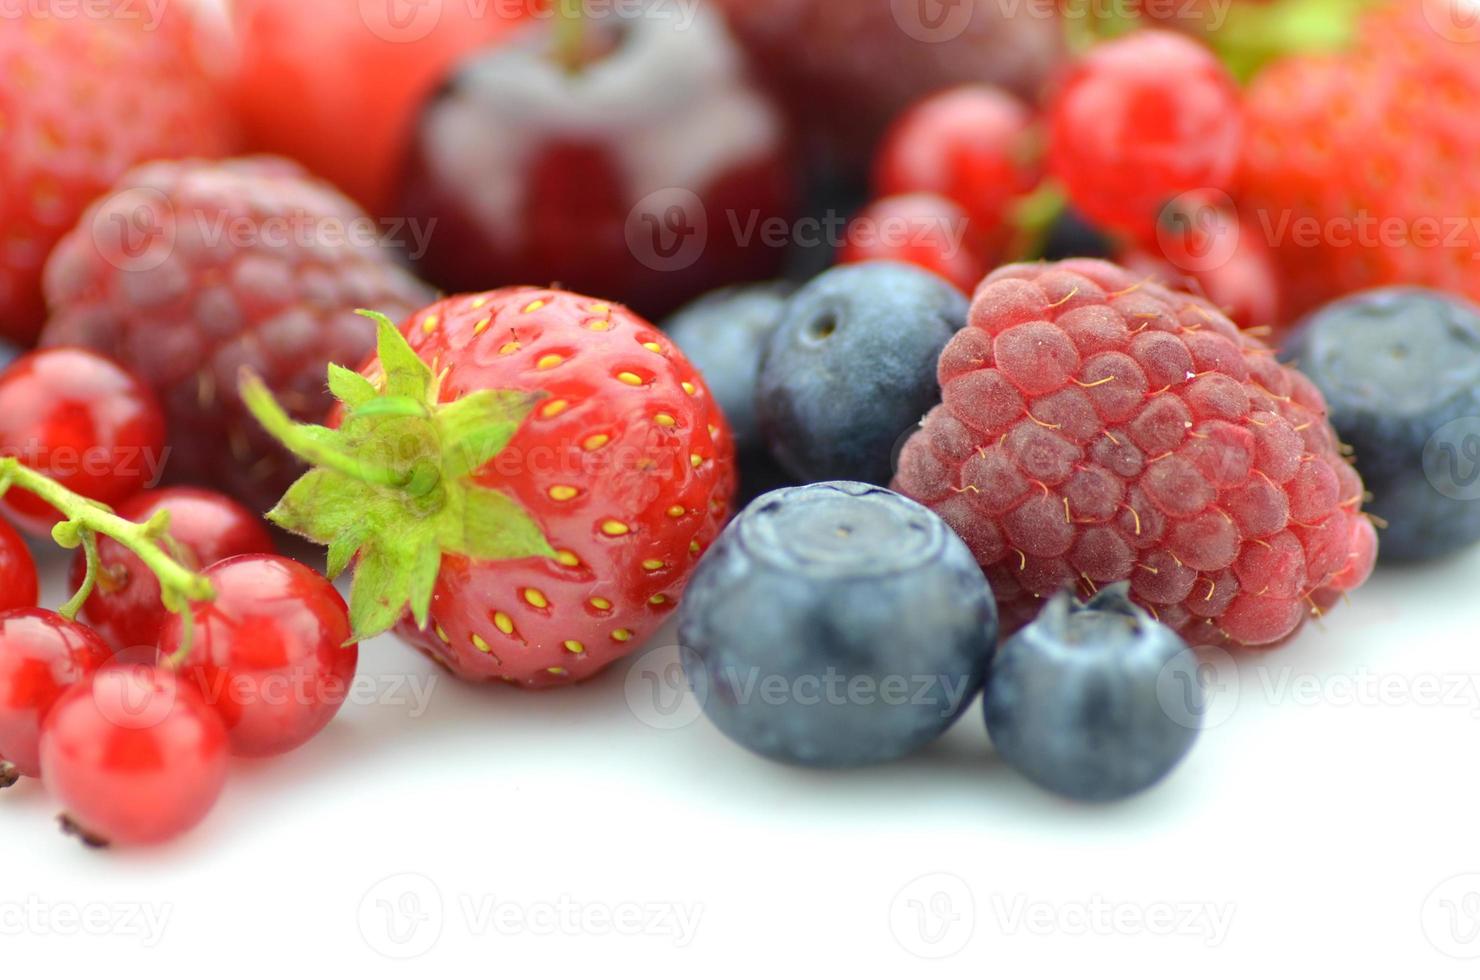 soft fruits strawberries raspberries cherries blueberries currants isolated on white photo